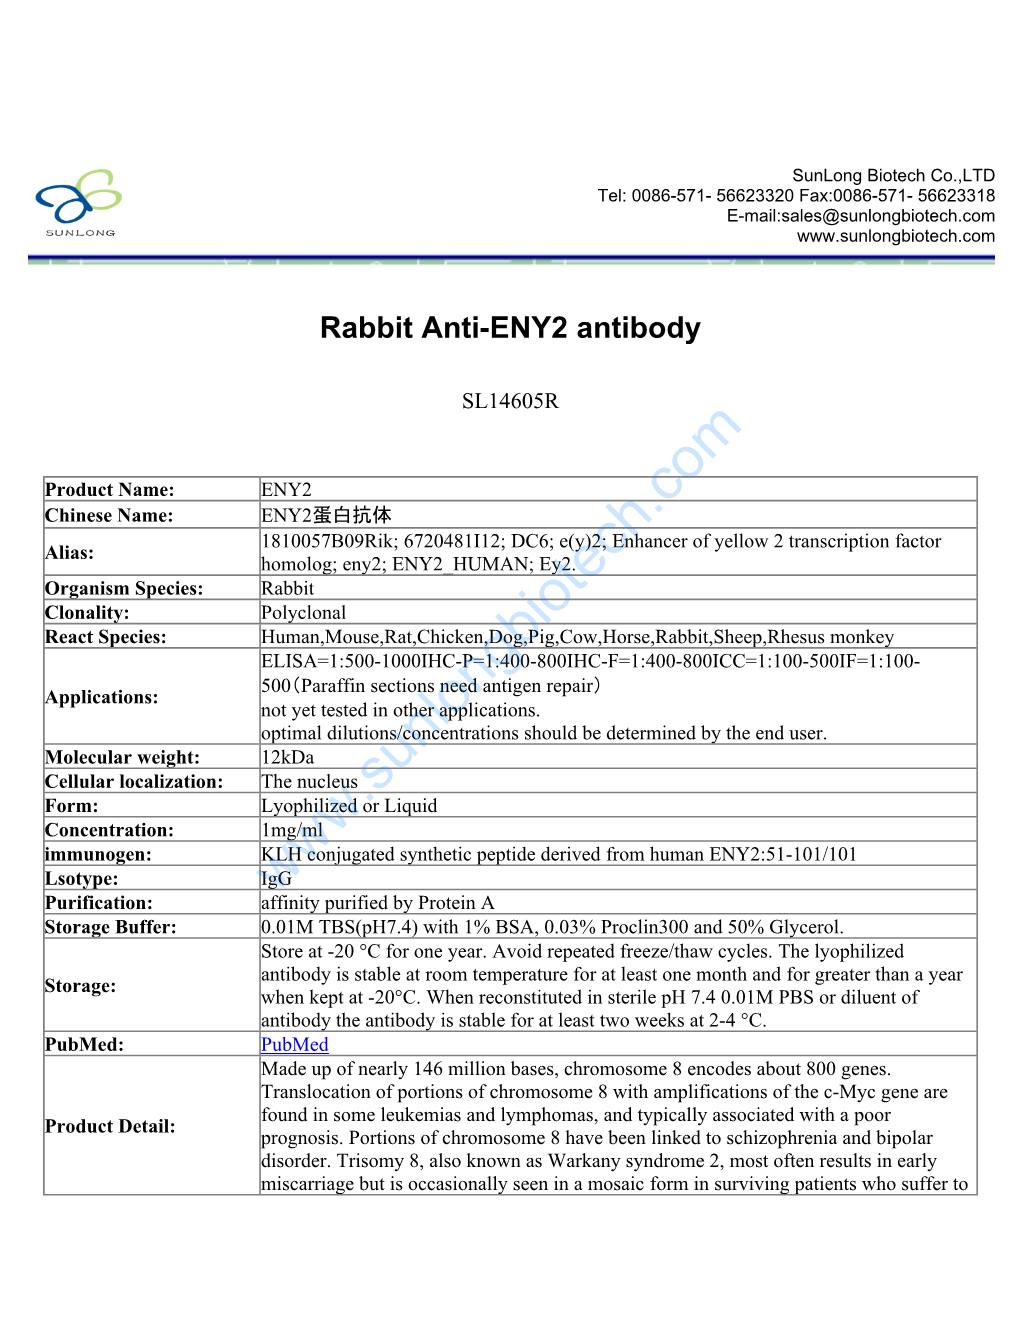 Rabbit Anti-ENY2 Antibody-SL14605R